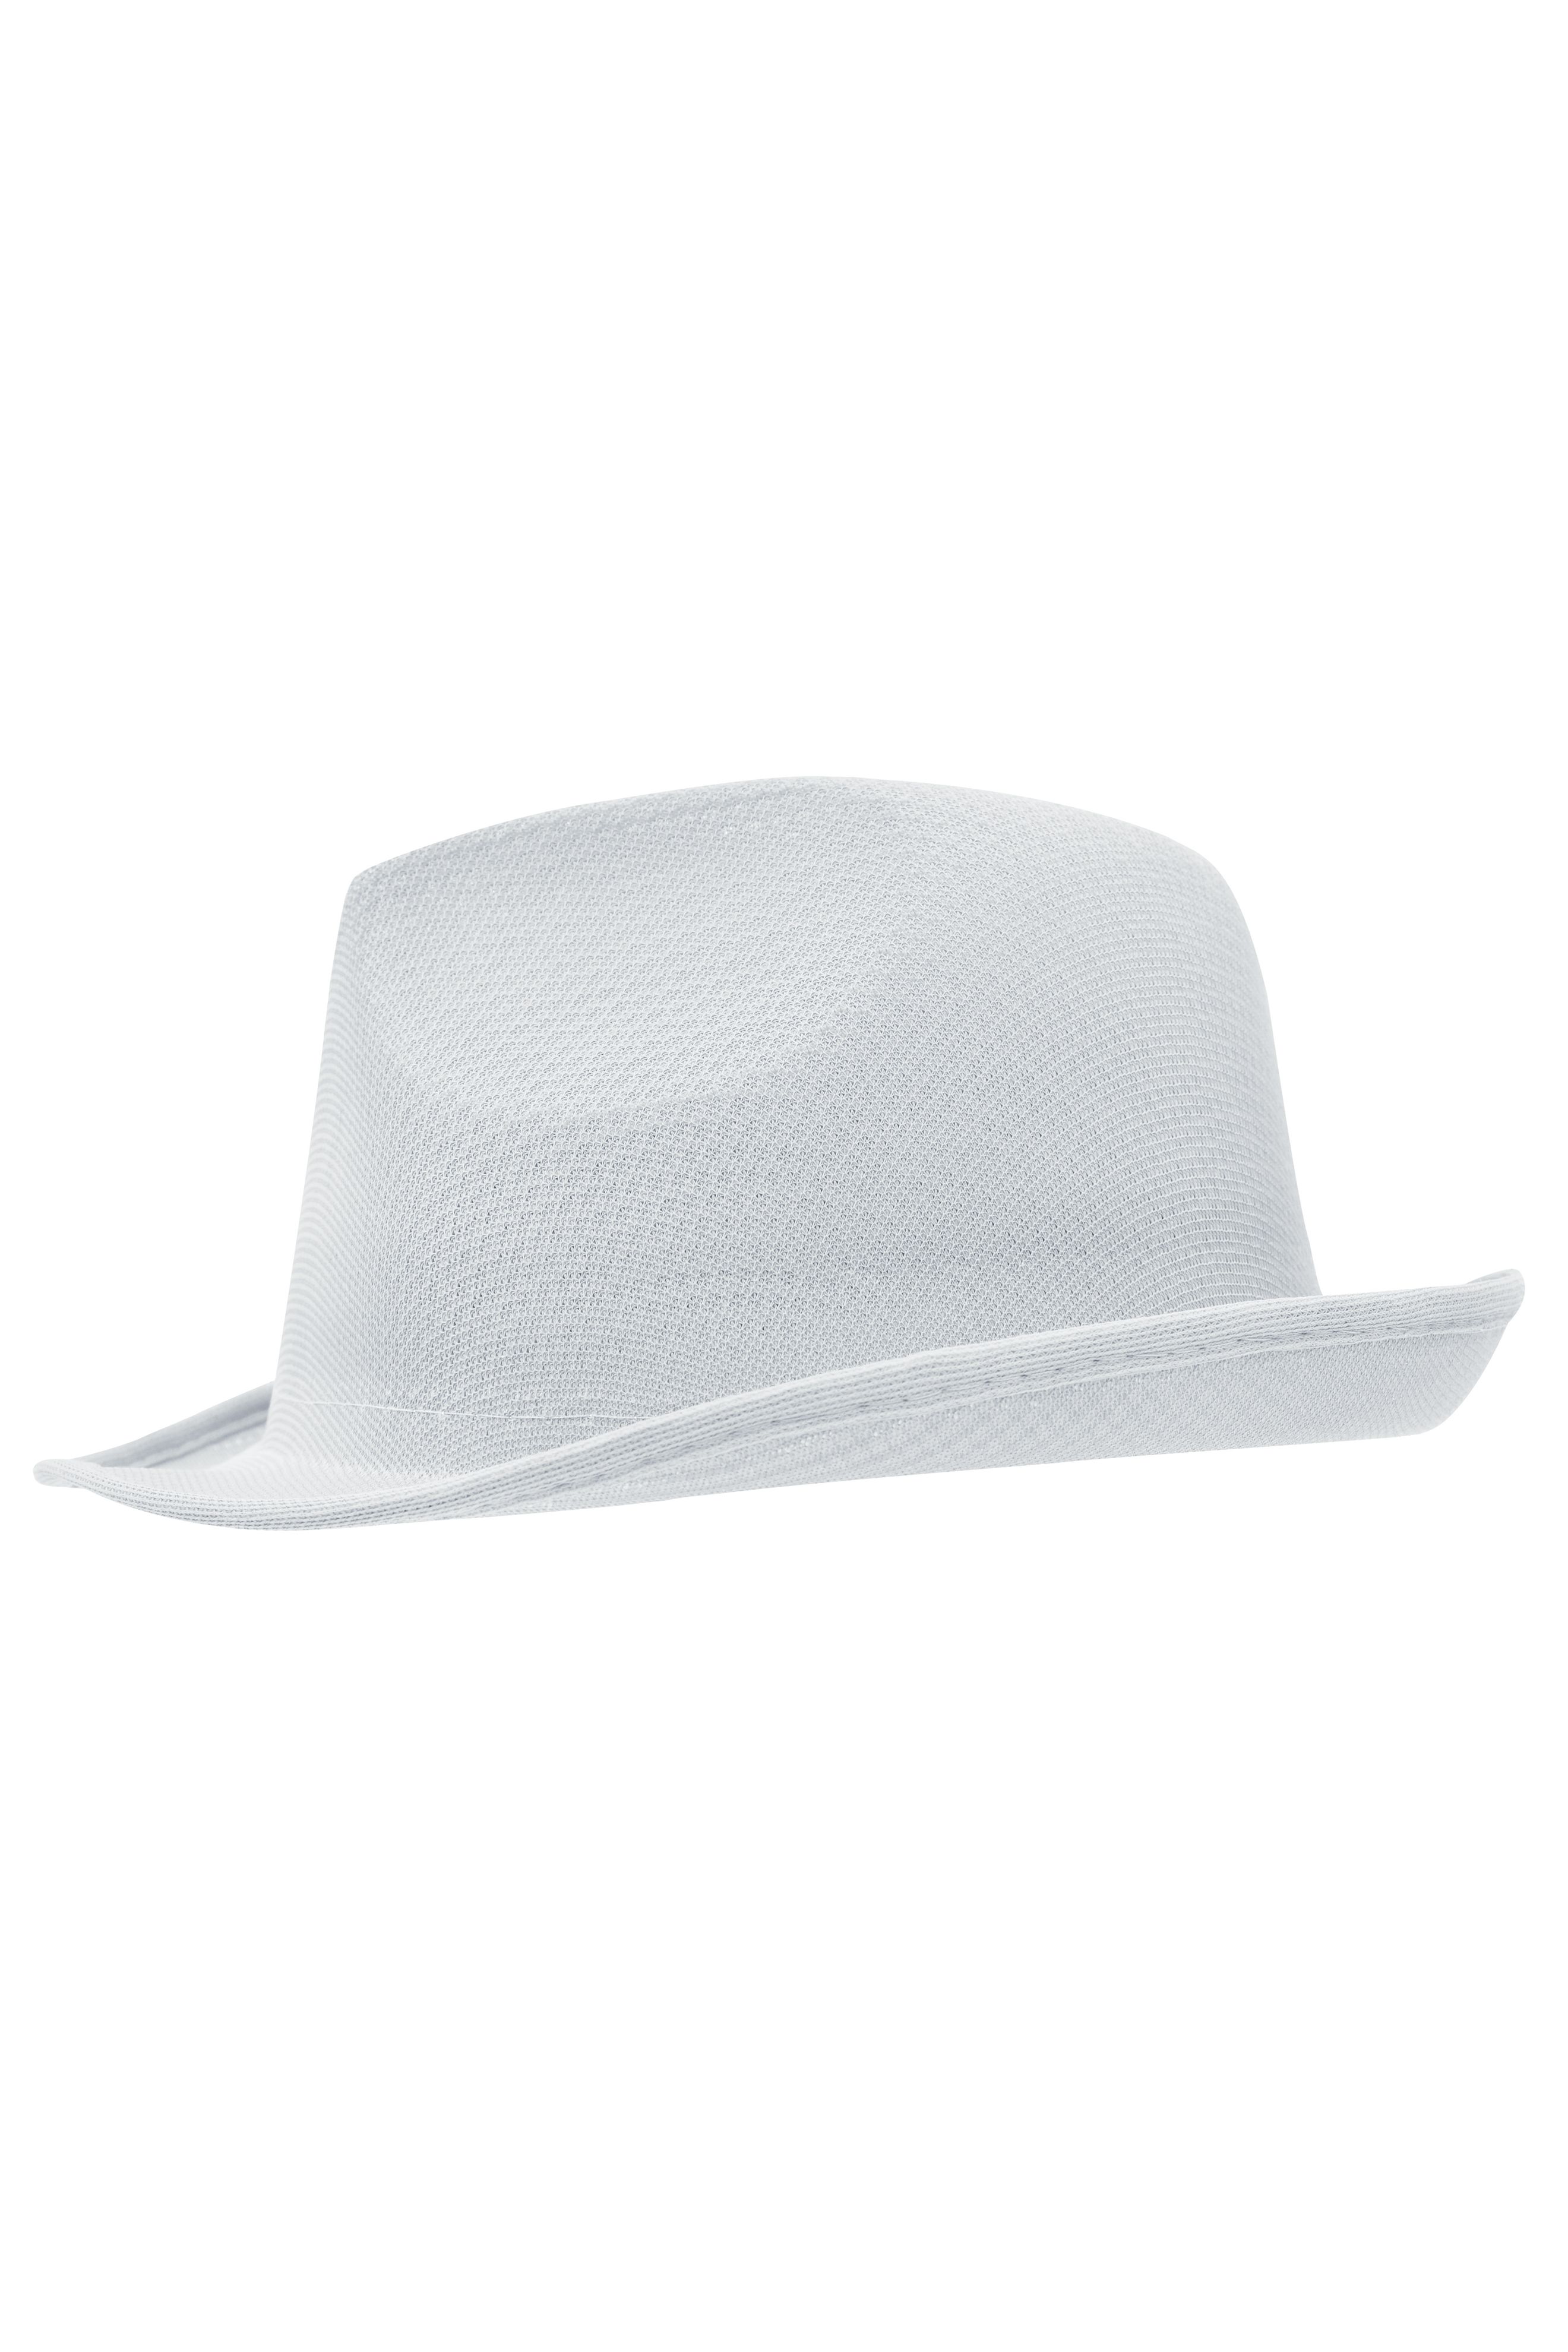 Unisex Promotion Hat White-Daiber